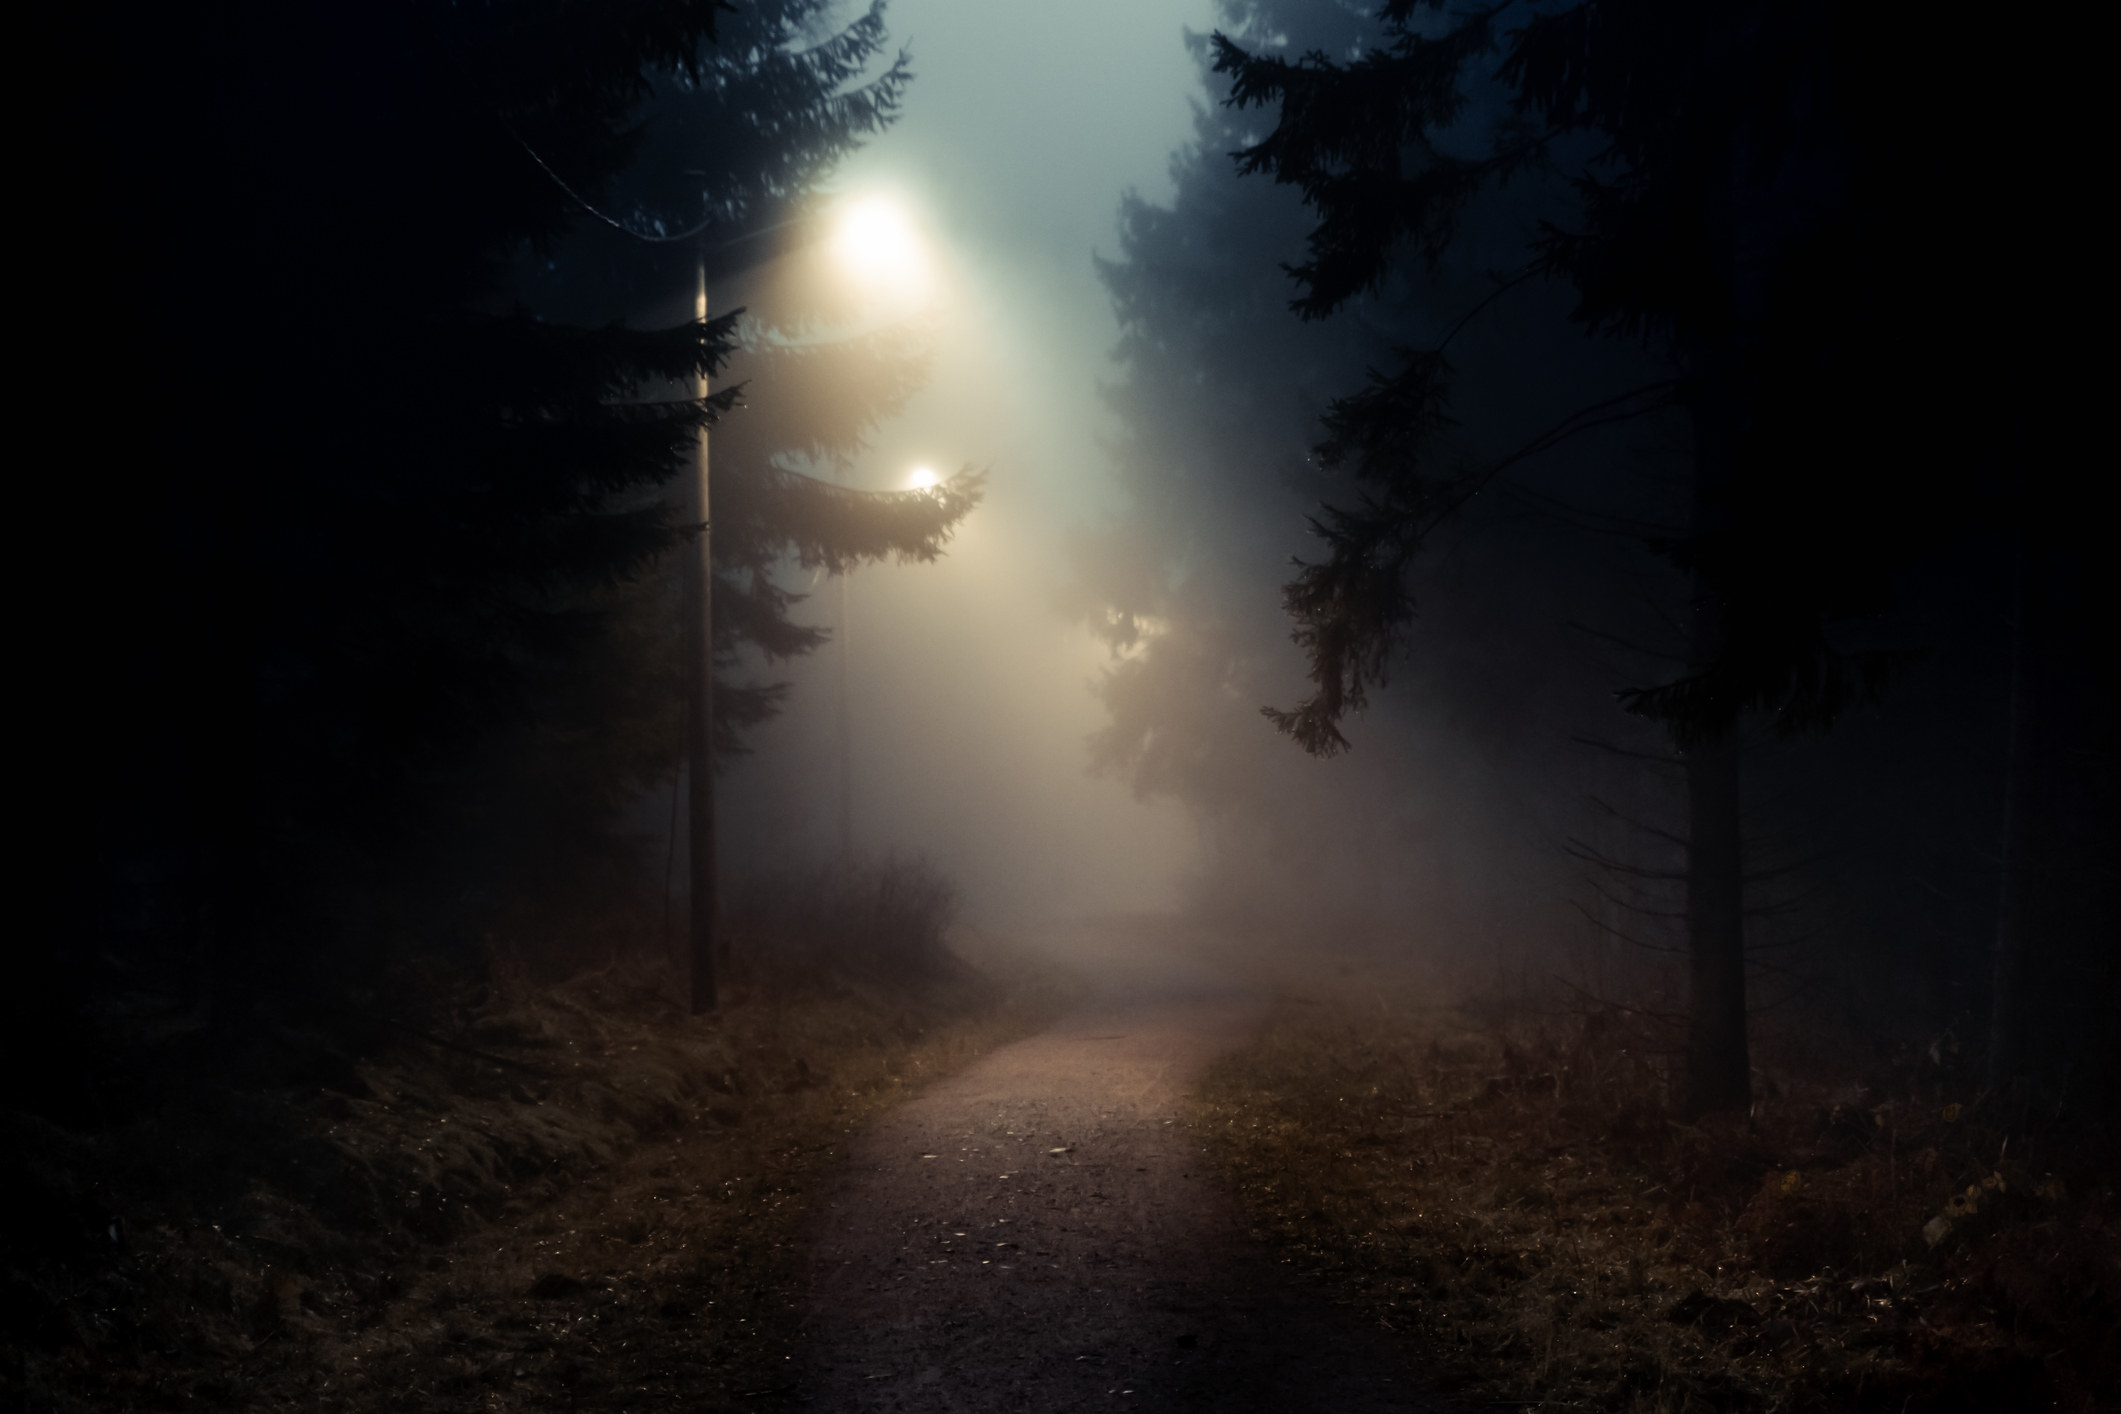 A dark, desolate road illuminated by moonlight